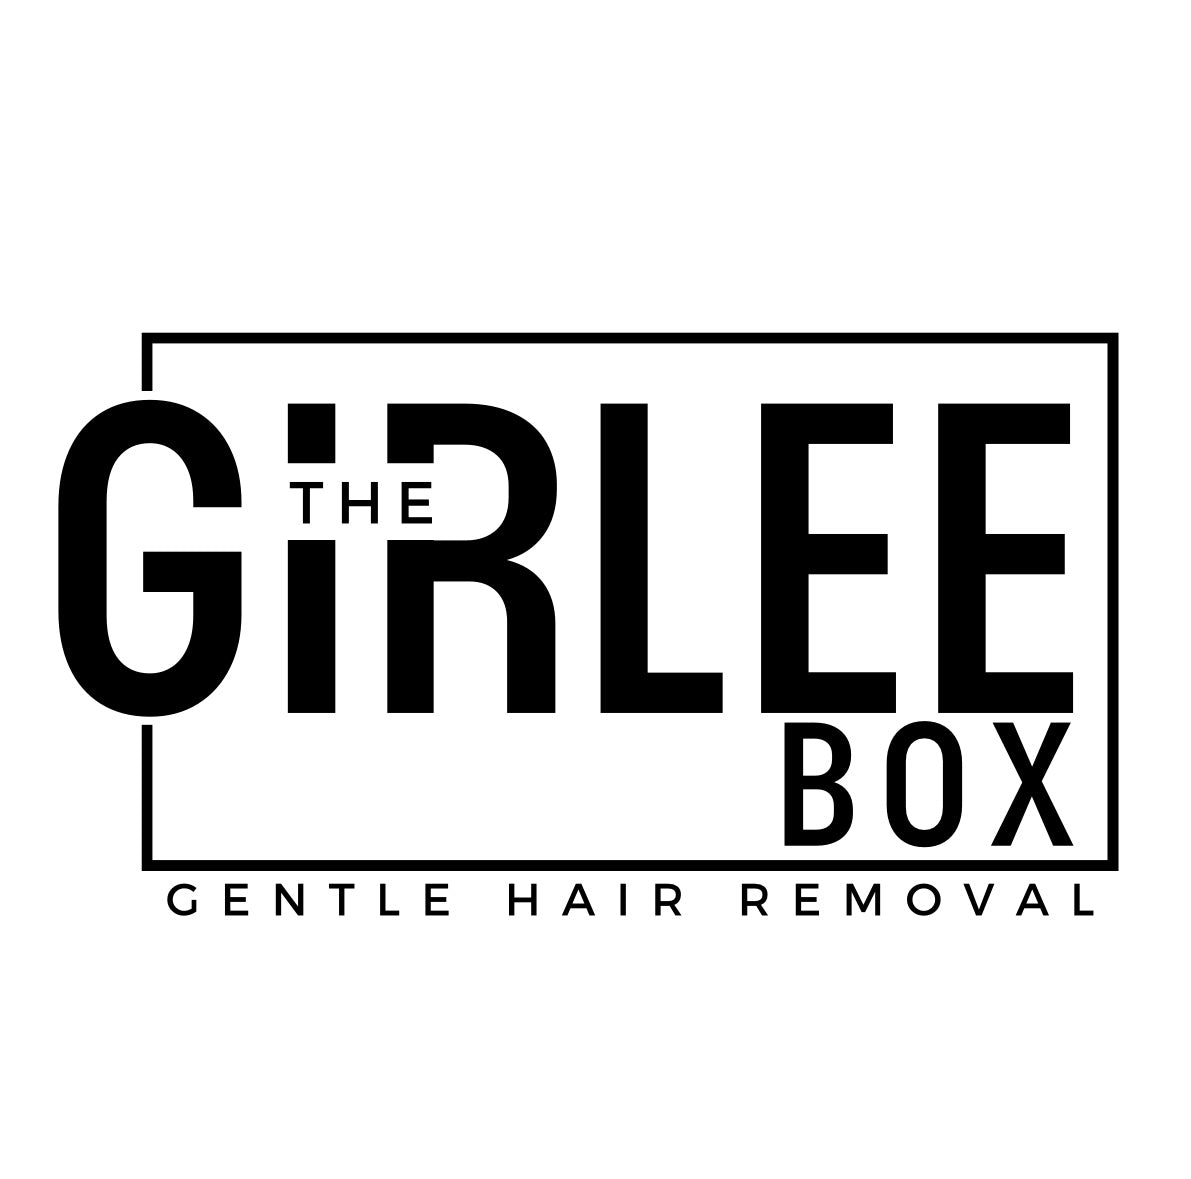 The Girlee Box